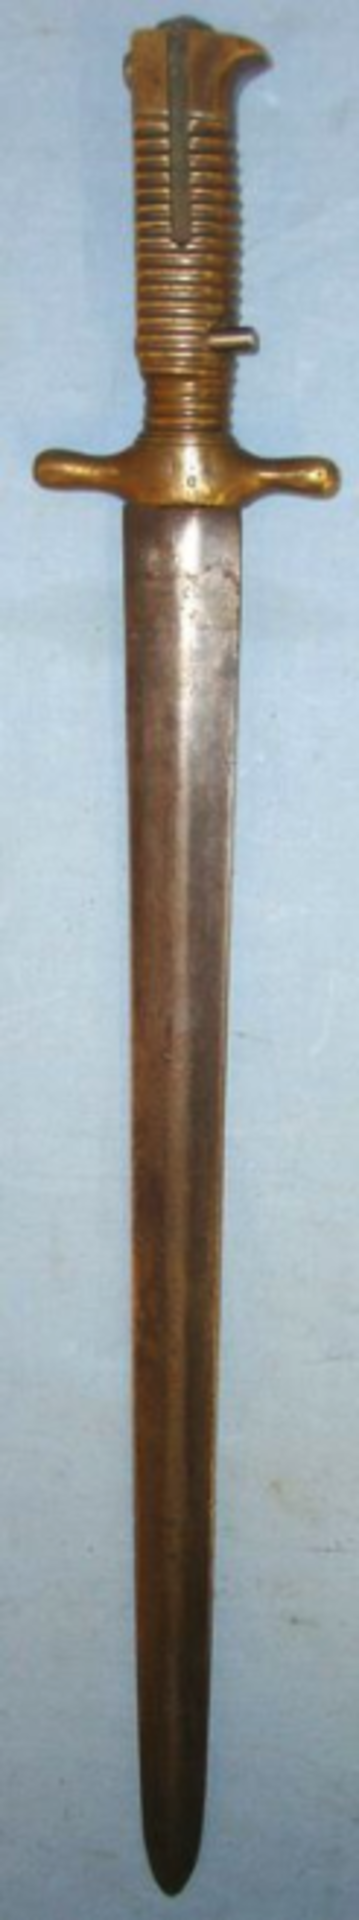 RARE, Italian Piedmont Model 1844 Artillery Sword Bayonet For The M1856 Bersaglieri Carbine - Image 2 of 3